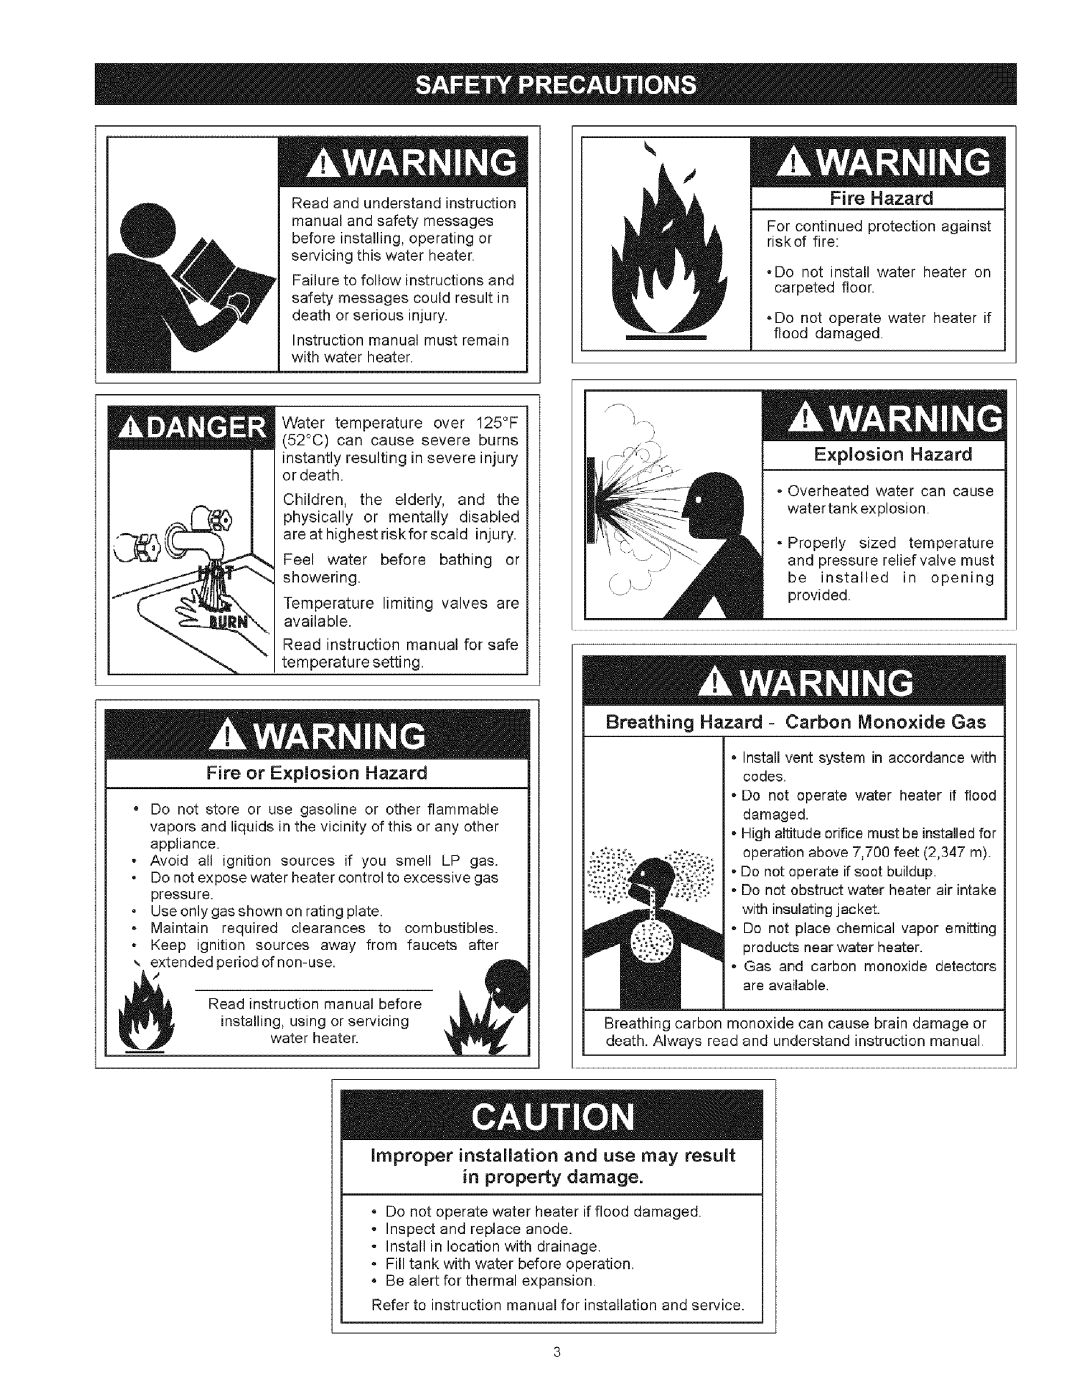 Kenmore 334, 530 Fire or Explosion Hazard, Fire Hazard, Breathing Hazard - Carbon Monoxide Gas, in property damage 